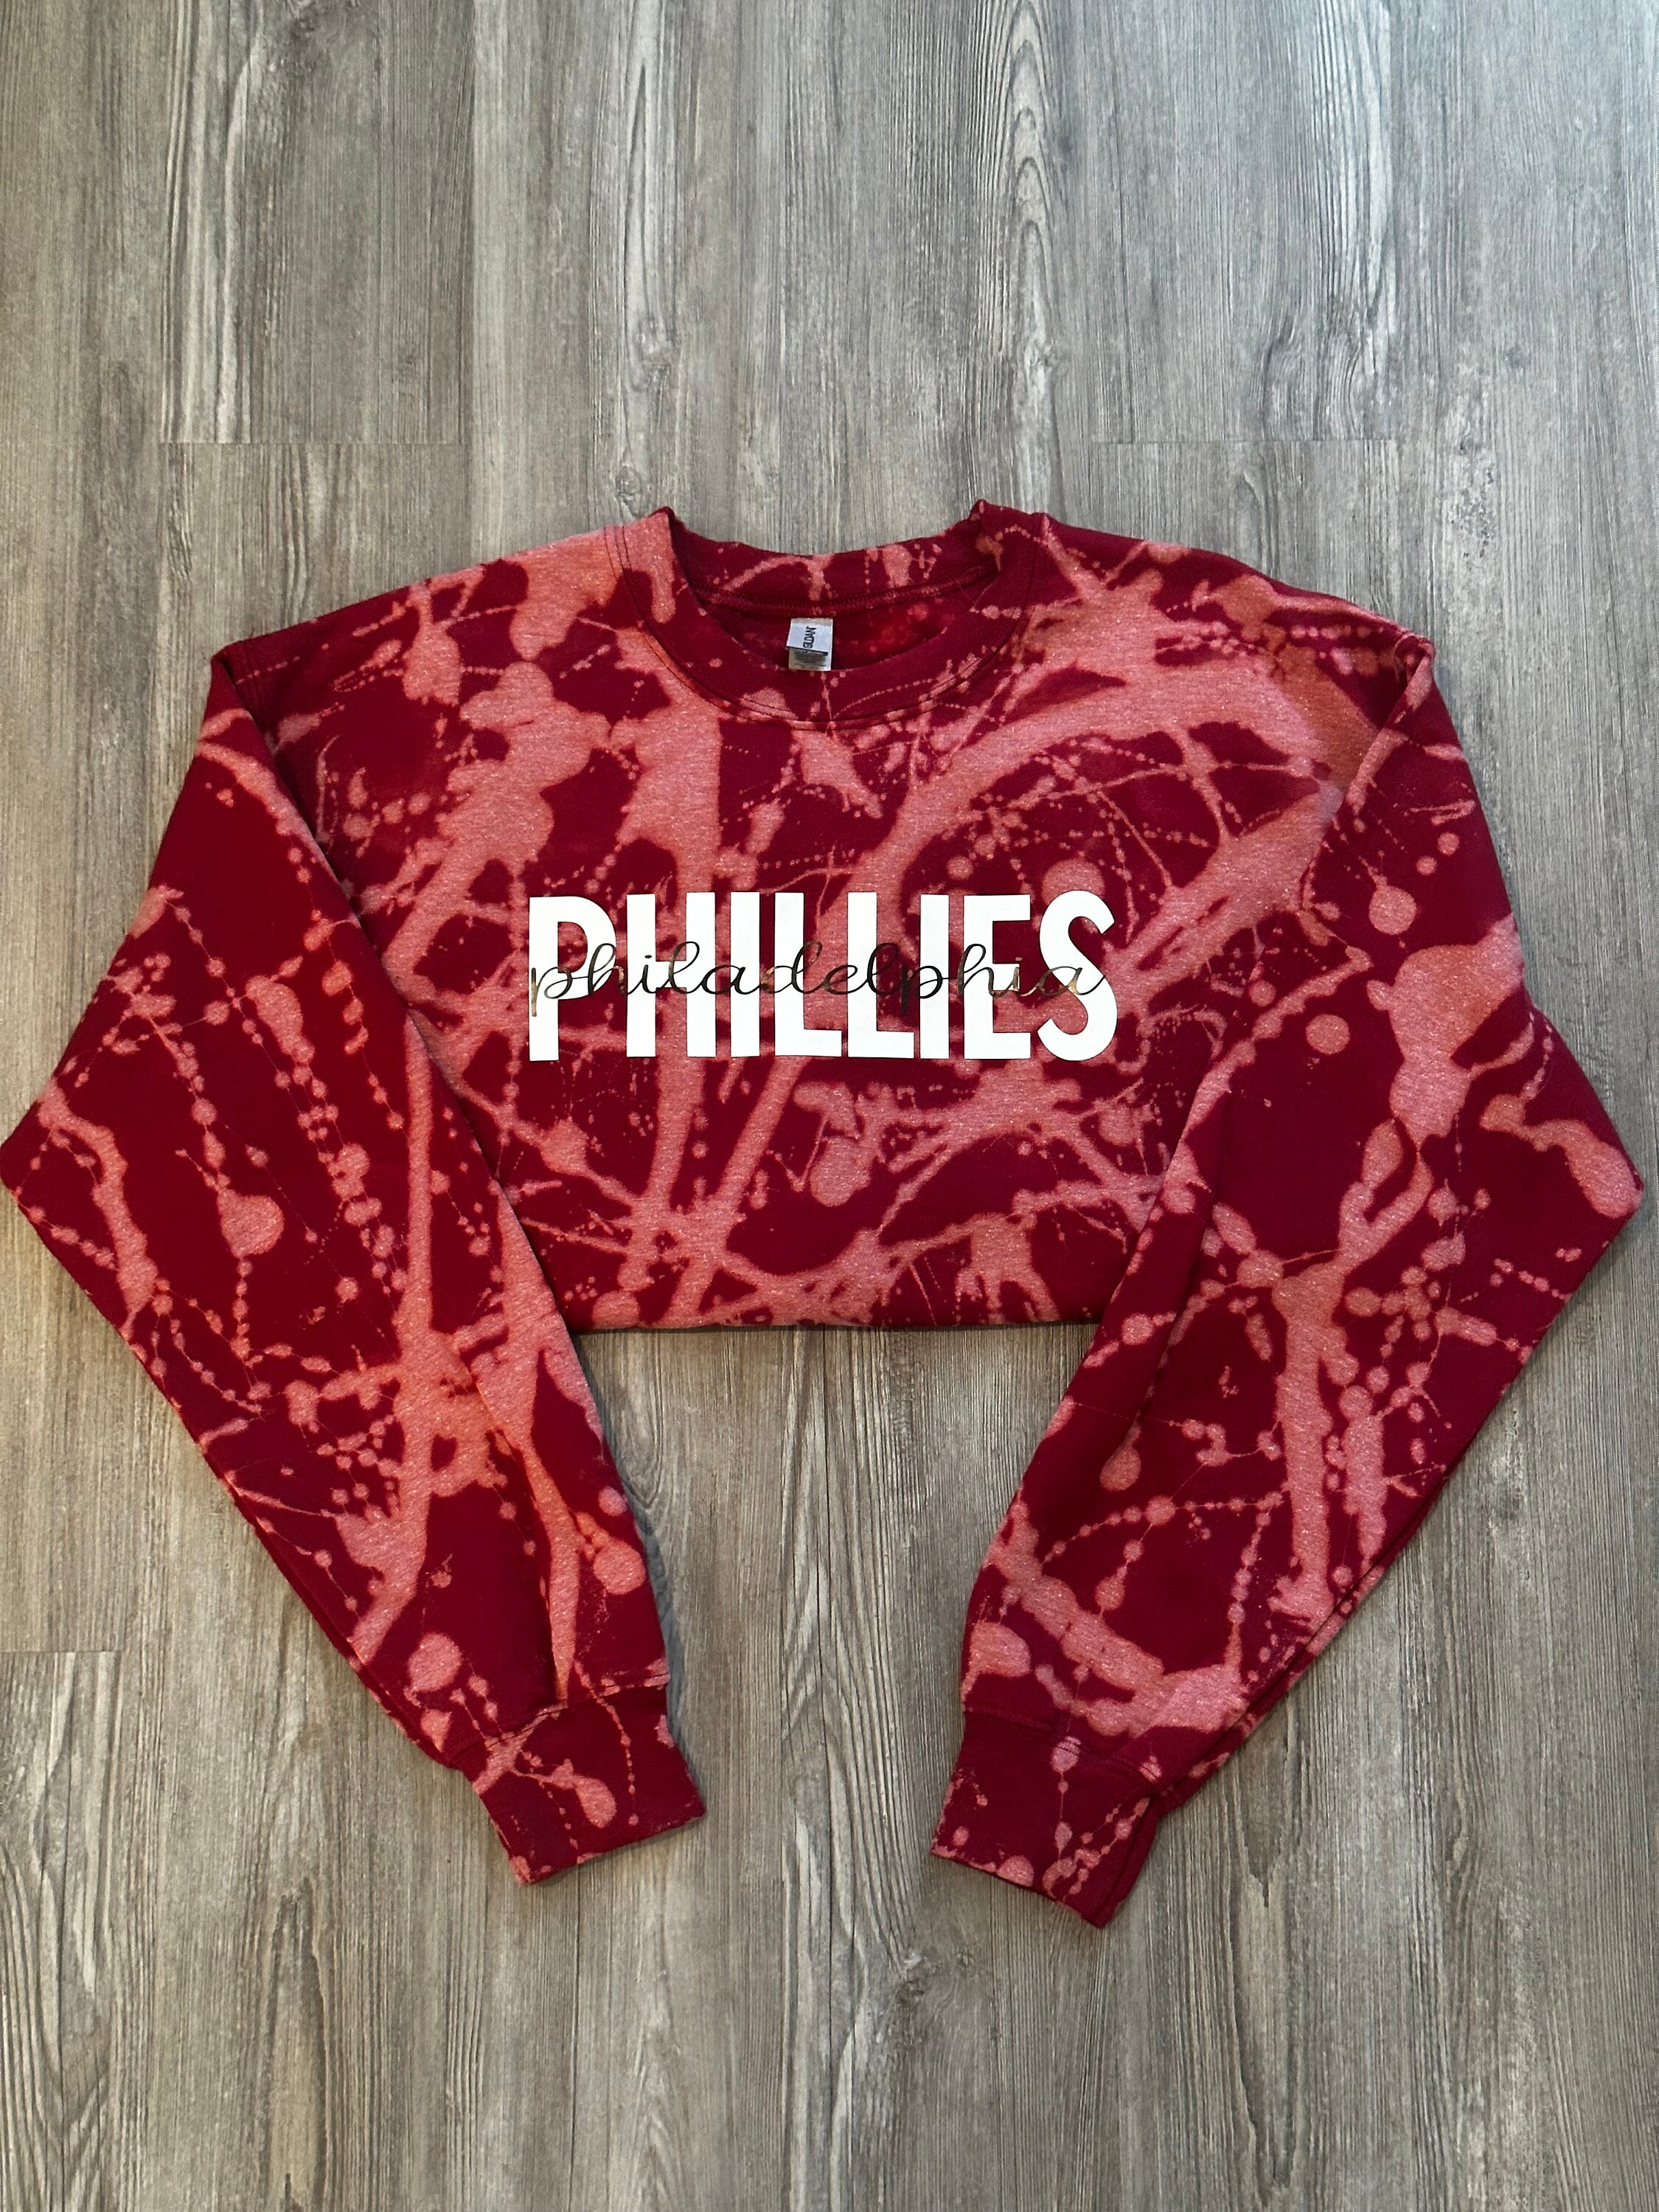 Phillies Powder Blue Hoodie Sweatshirt Tshirt All Over Printed Tie Dyed  Style Philadelphia Phillies Baseball Shirts Mlb Postseason Playoffs Shirt  Phillies Game Outfit NEW - Laughinks